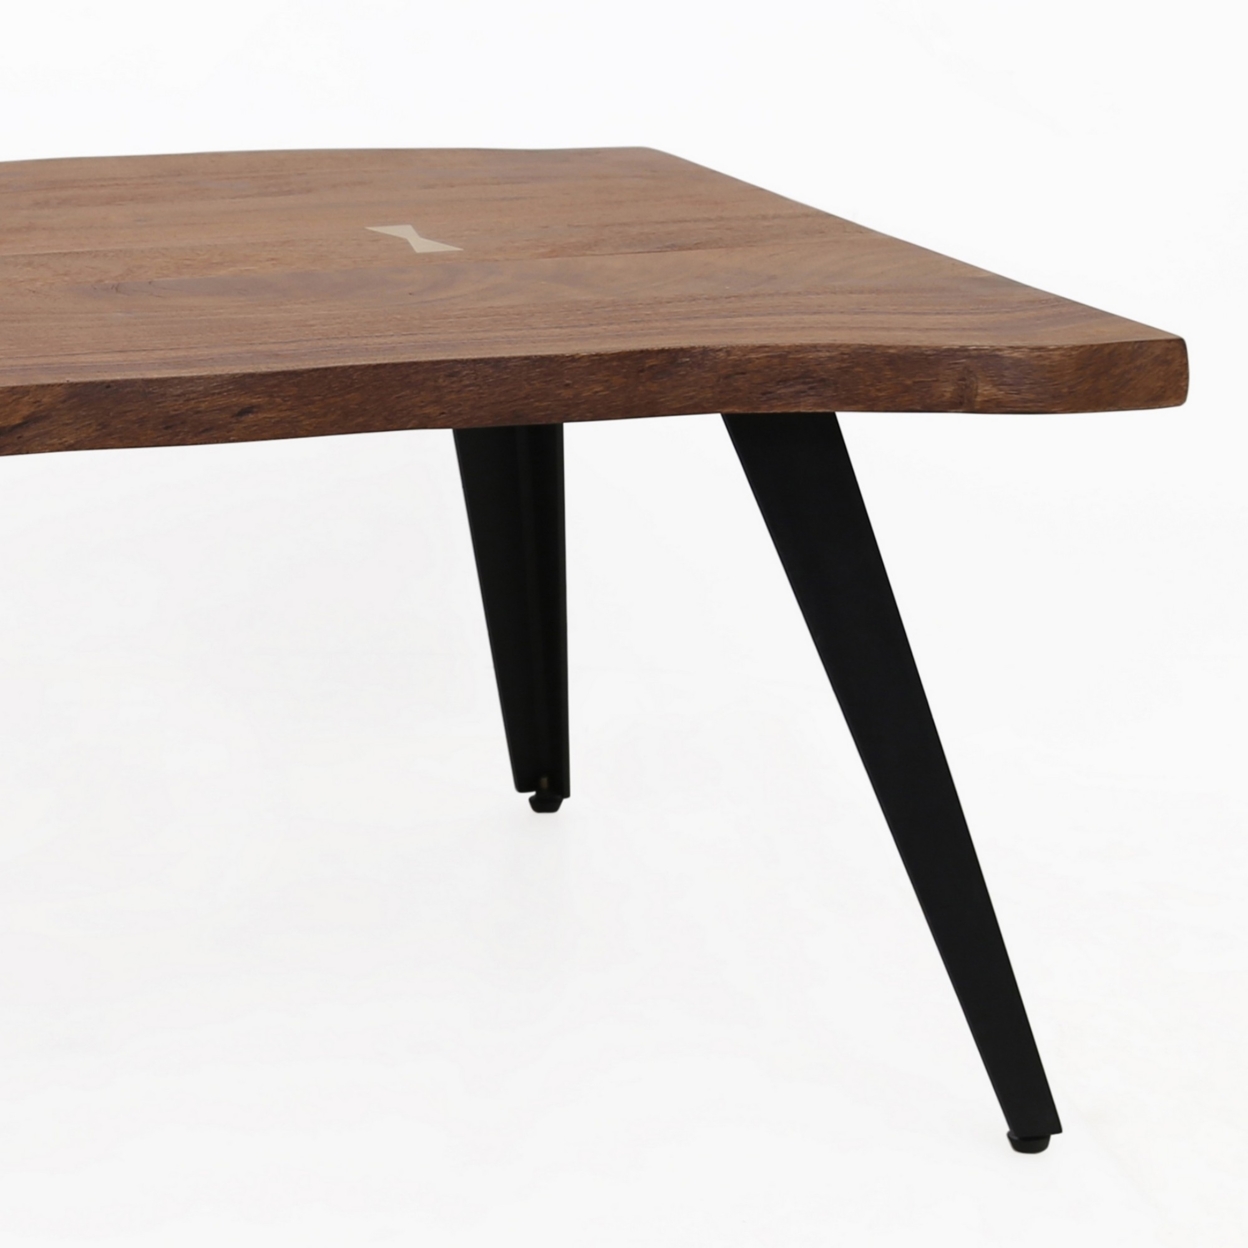 47 Inch Coffee Table, Live Edge Acacia Wood With Iron Legs, Brown, Black- Saltoro Sherpi